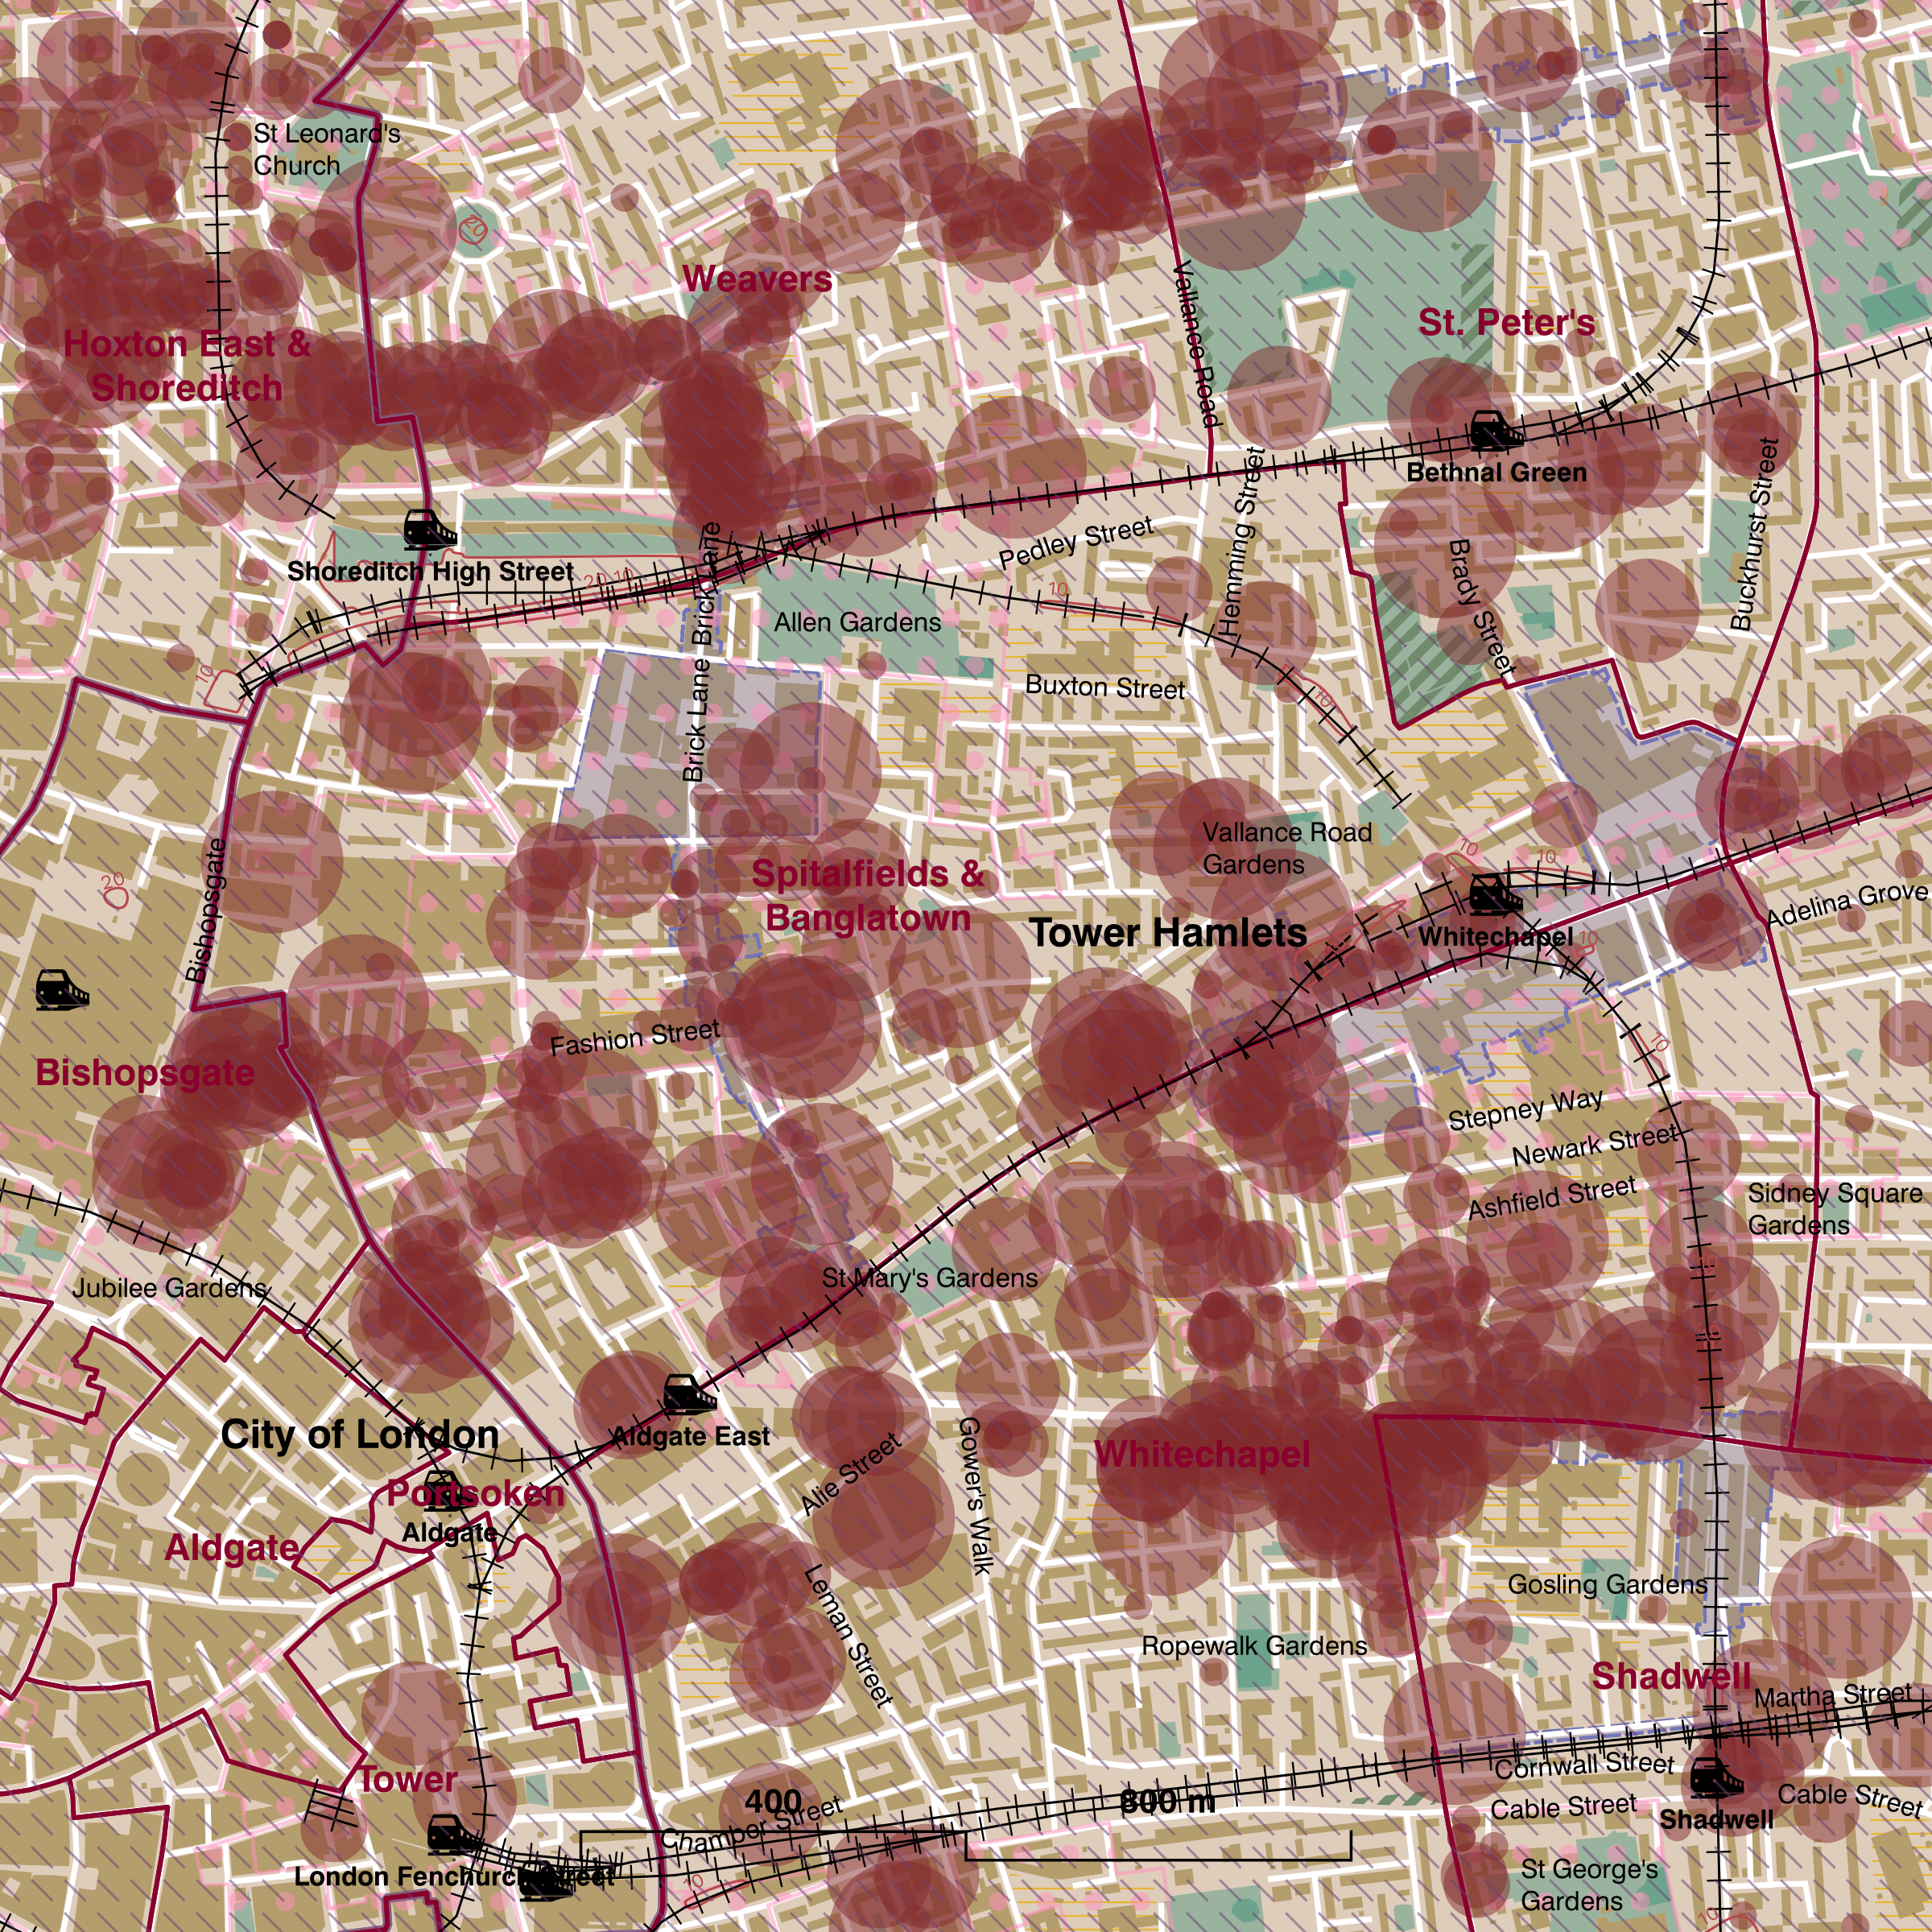 Map of Spitalfields & Banglatown ward